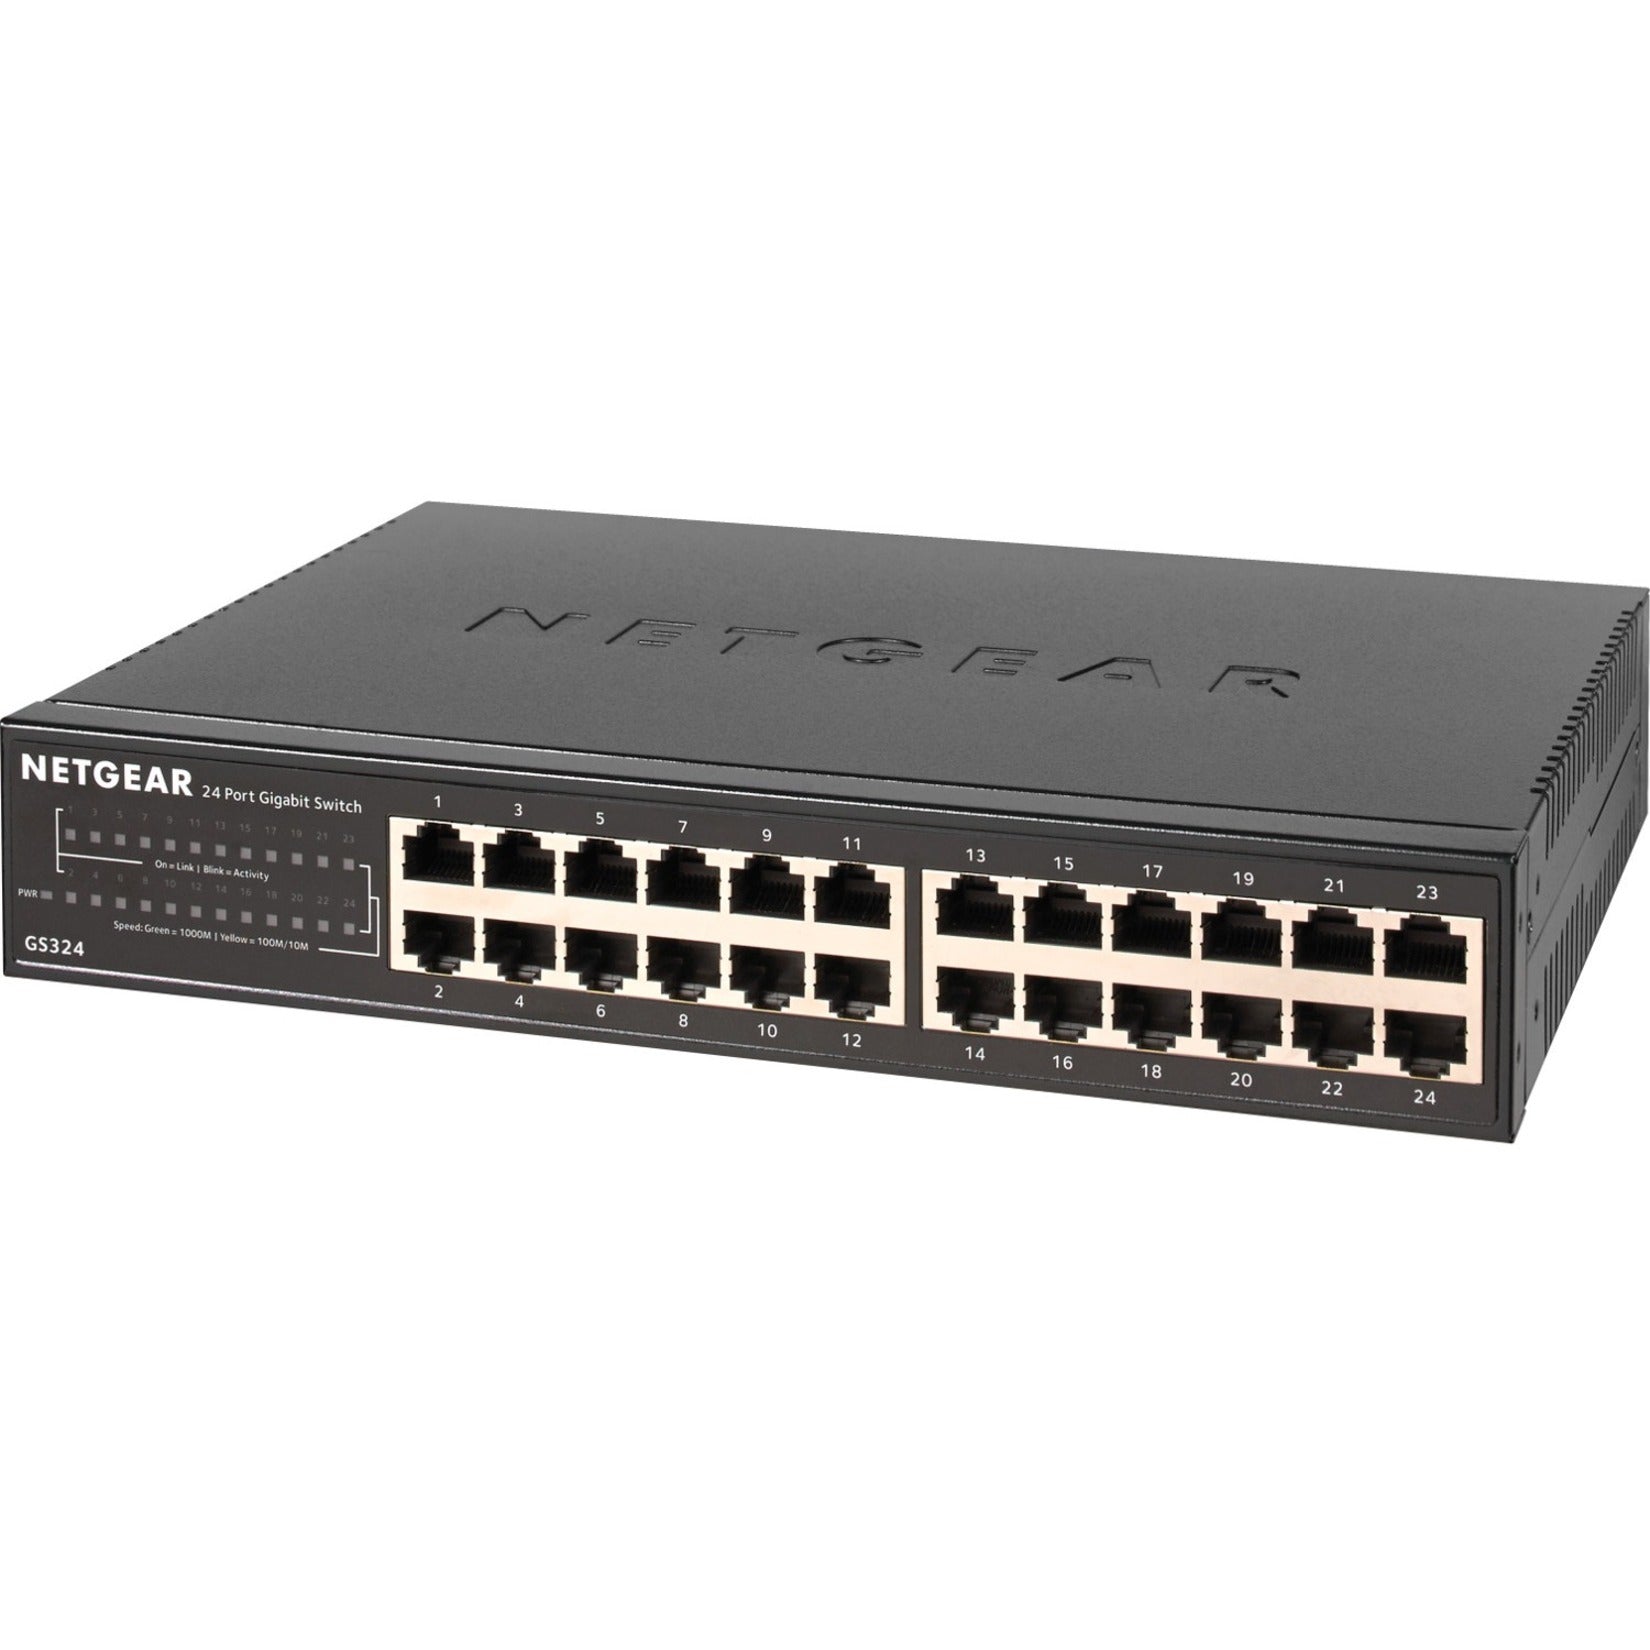 Netgear GS324-200NAS GS324 Ethernet Switch, 24 Port Gigabit Ethernet Network, 3 Year Warranty